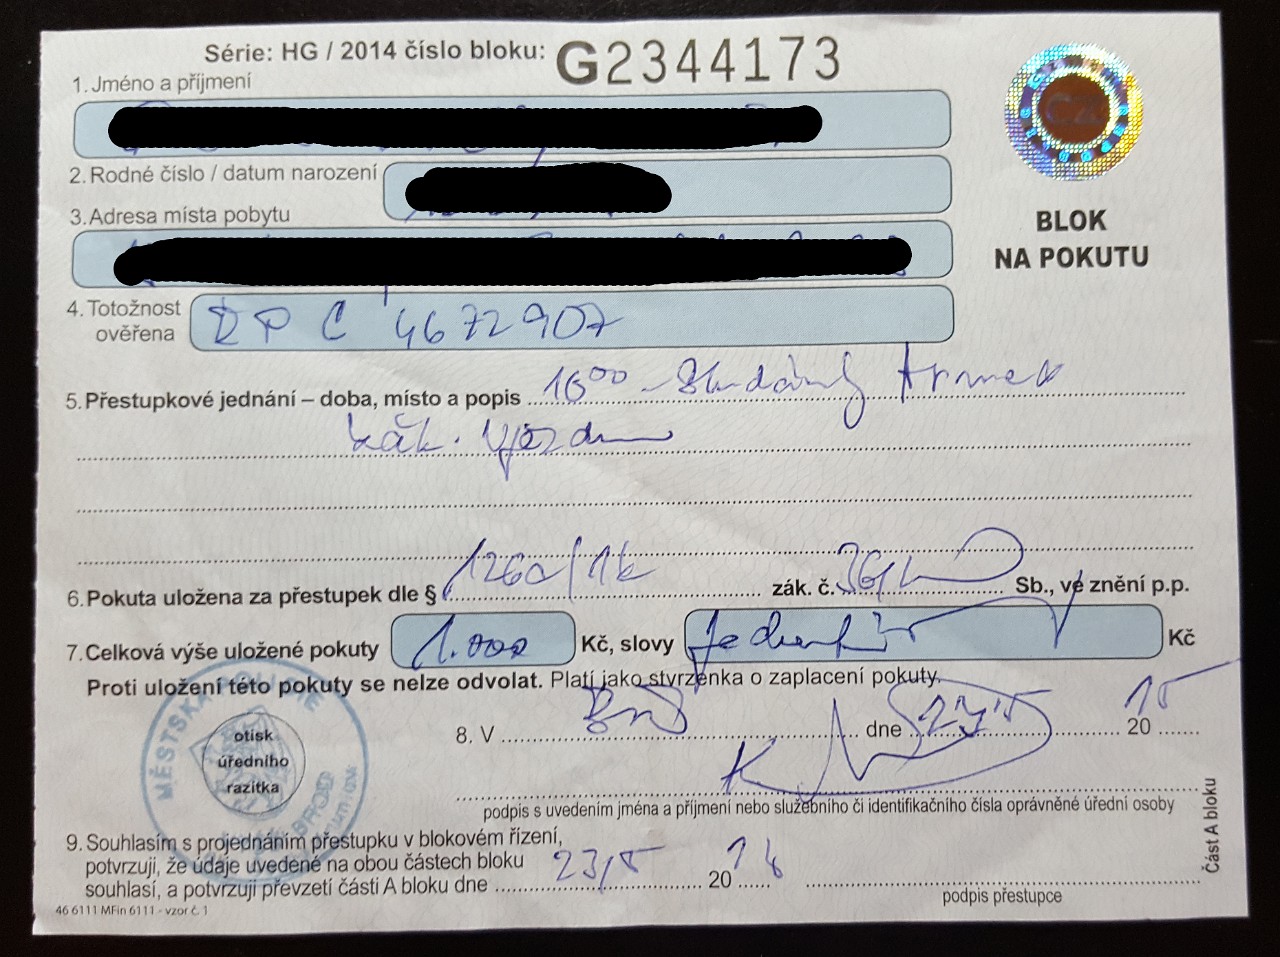 Czech traffic ticket receipt